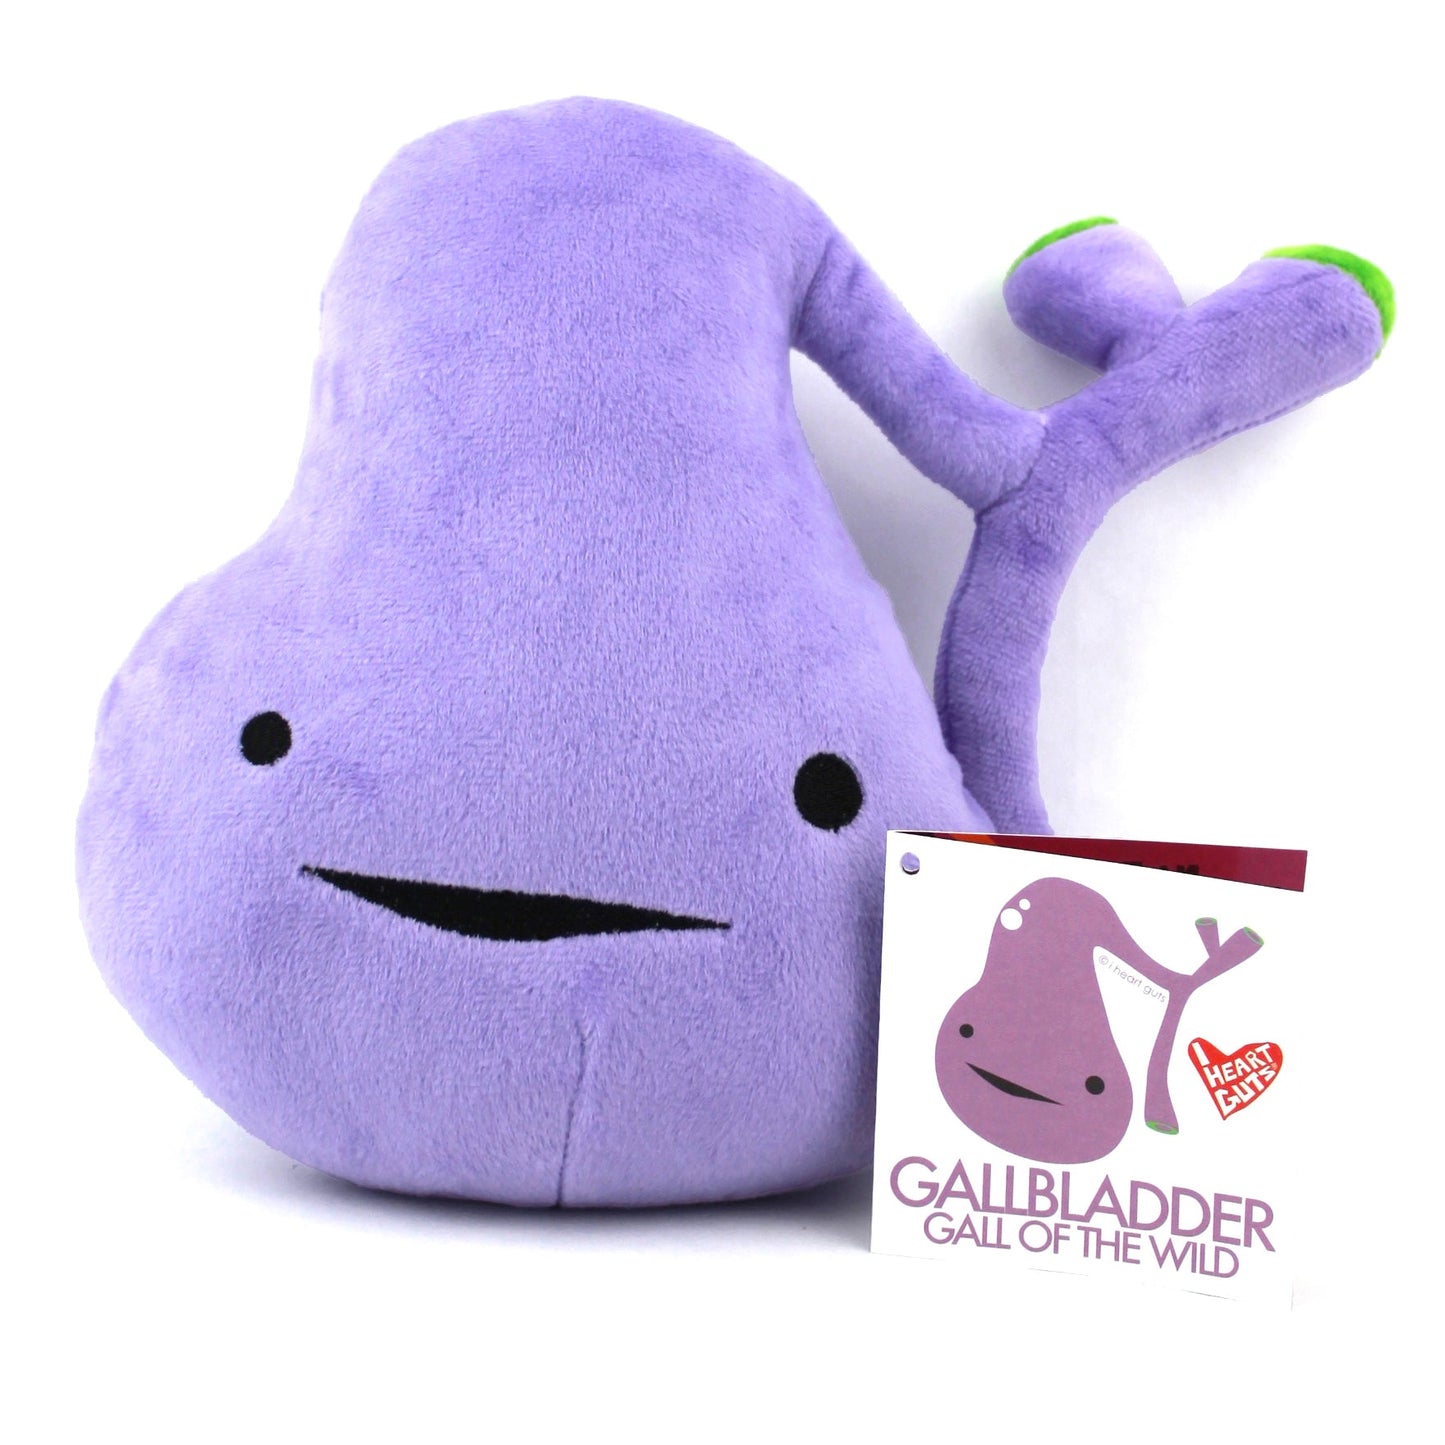 Gallbladder Plush - You've Got Gall